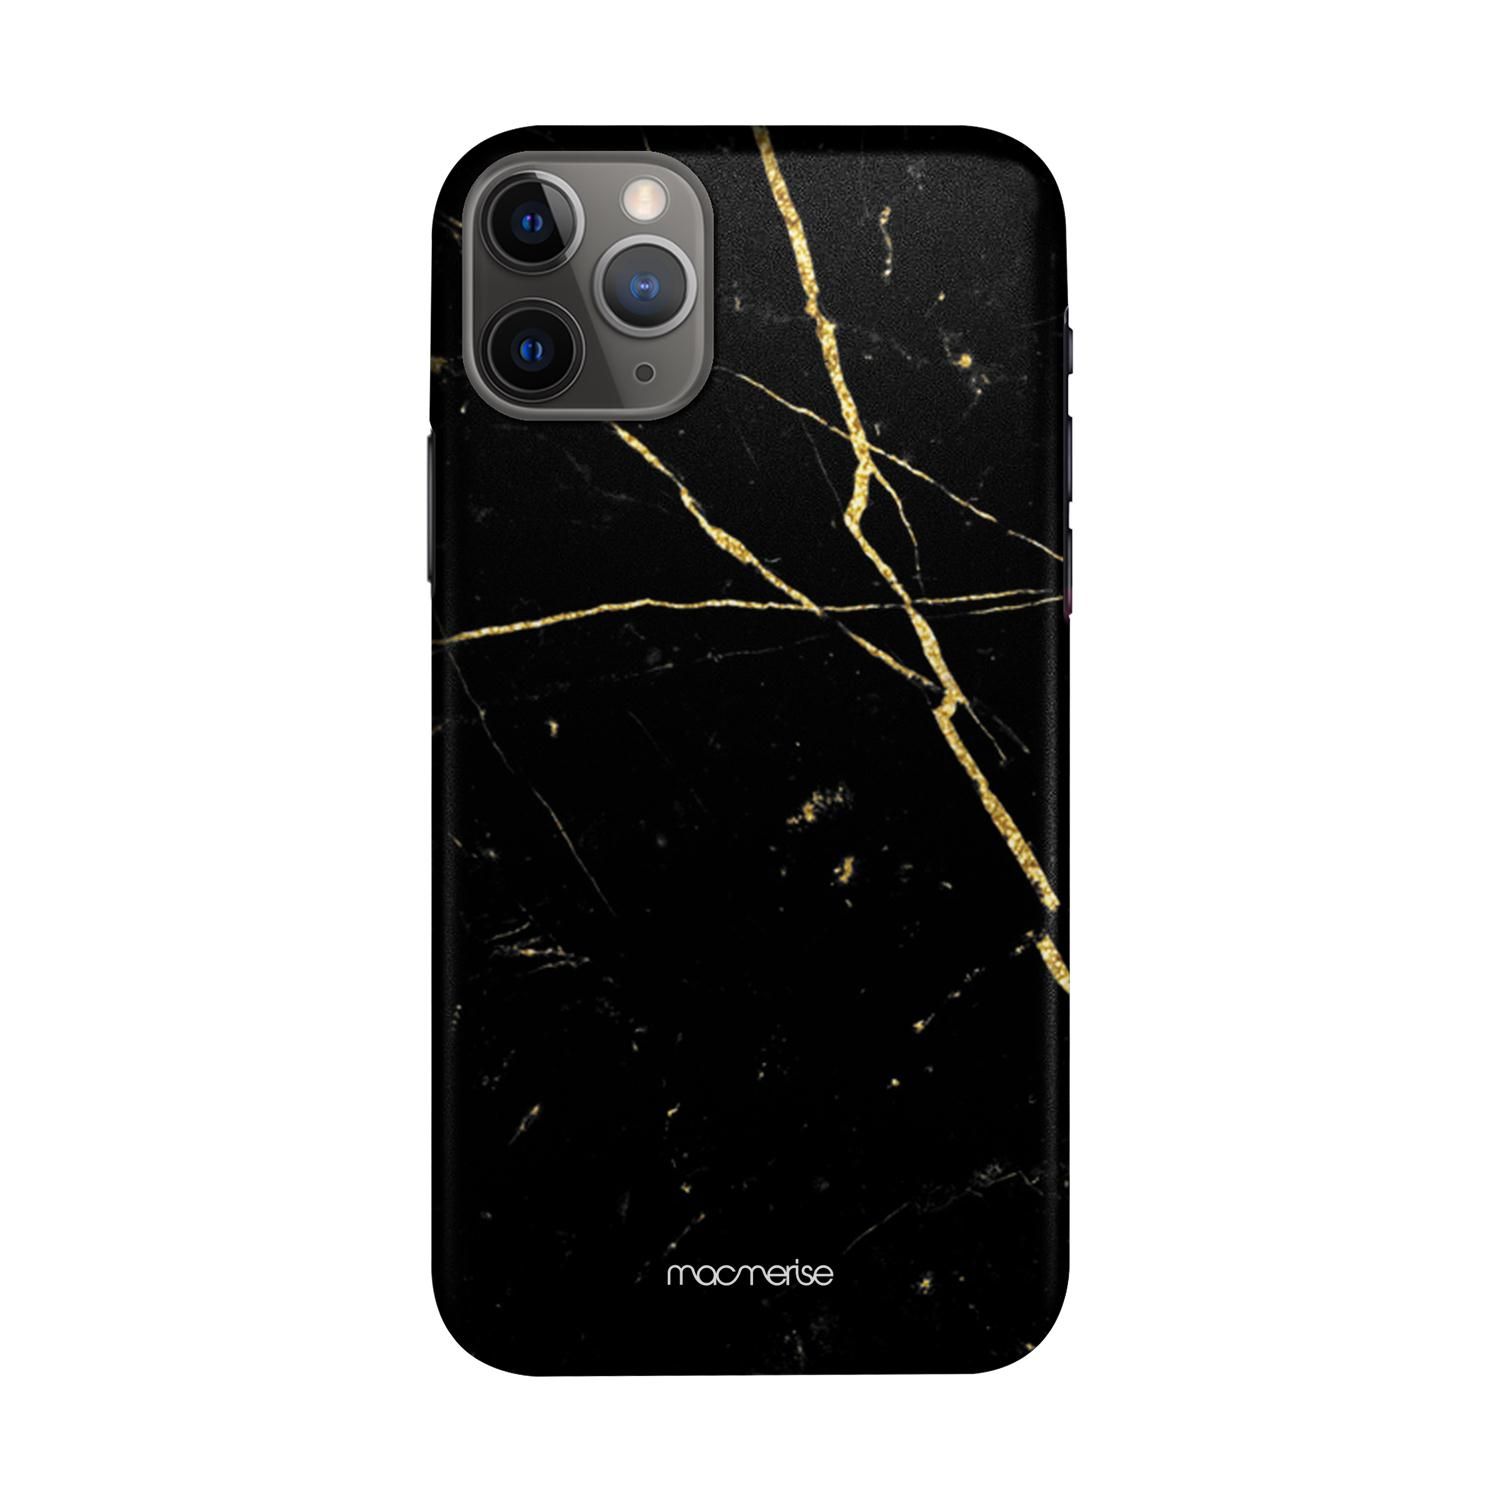 Buy Marble Black Onyx - Sleek Phone Case for iPhone 11 Pro Max Online